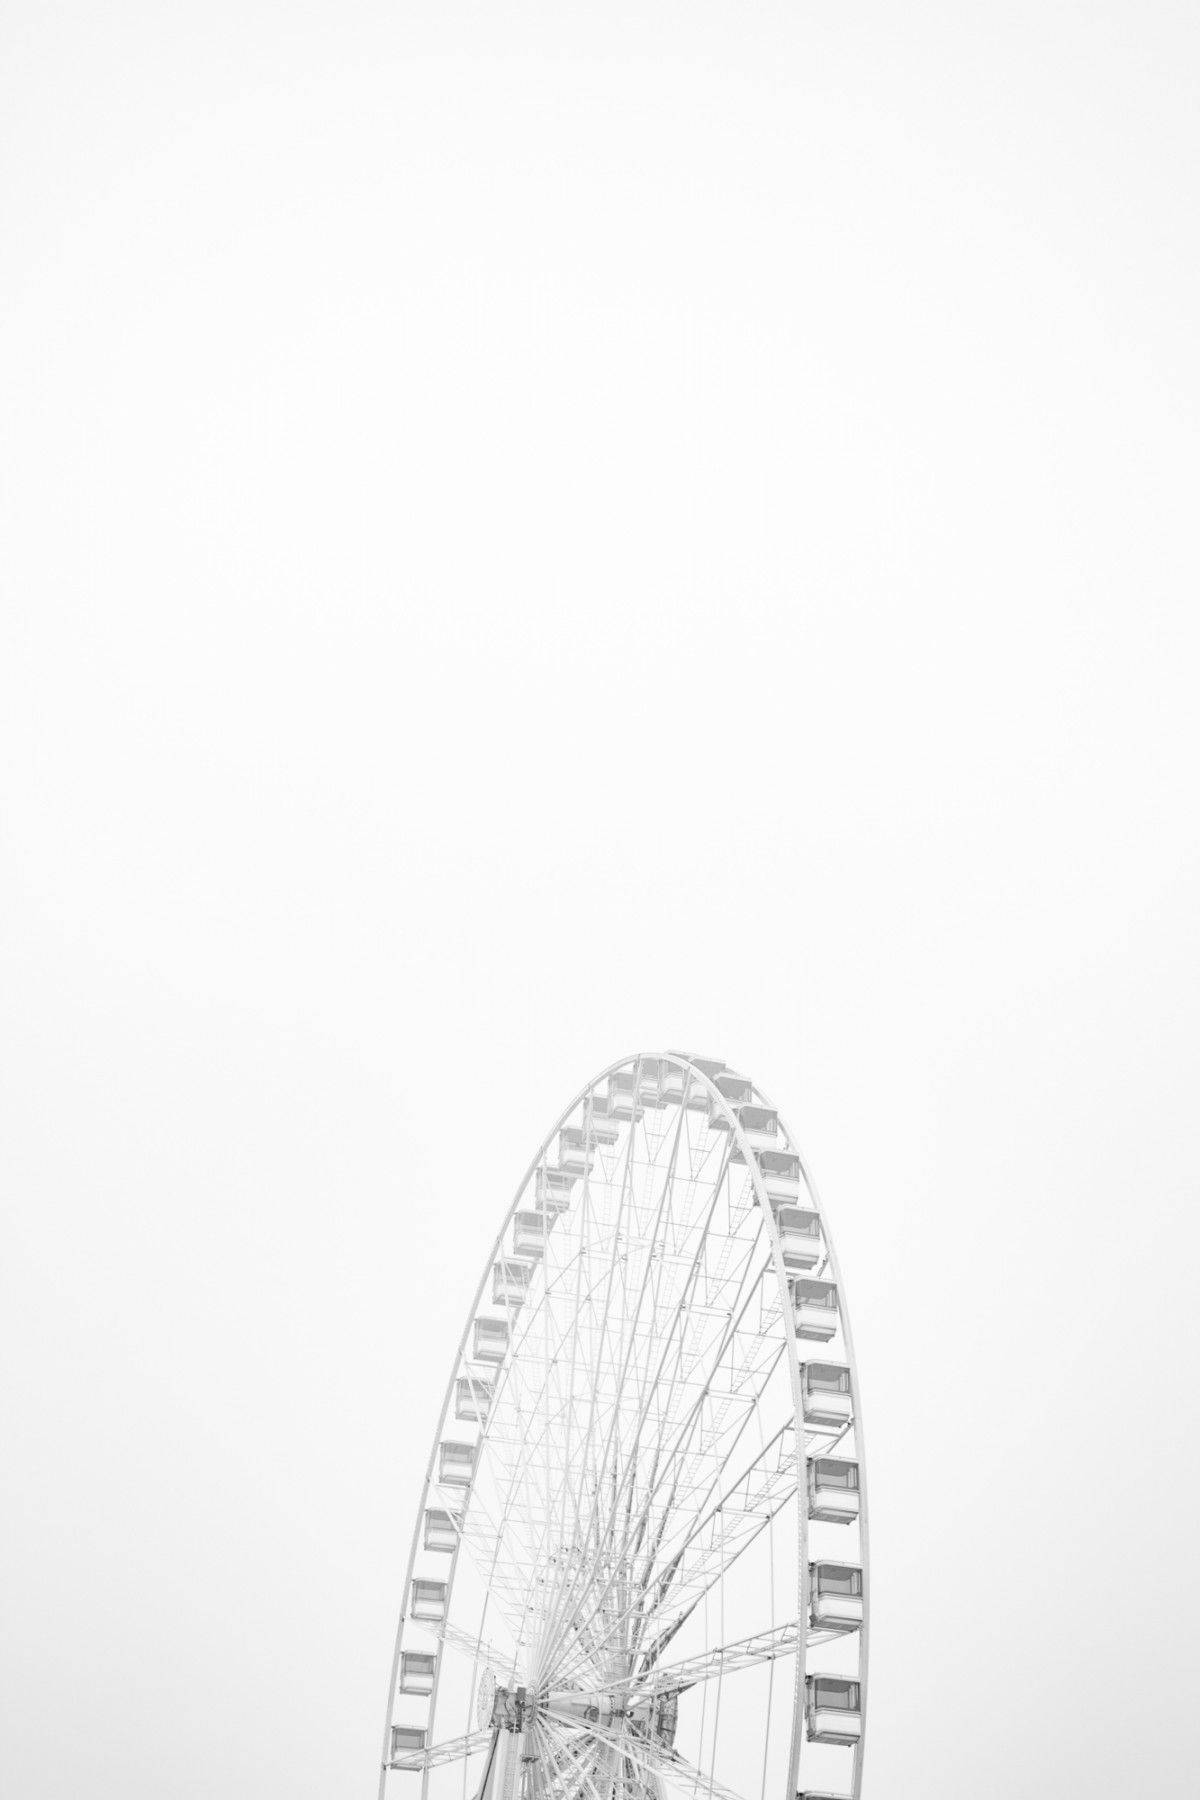 Gigantic Ferris Wheel In Cute White Aesthetic Wallpaper